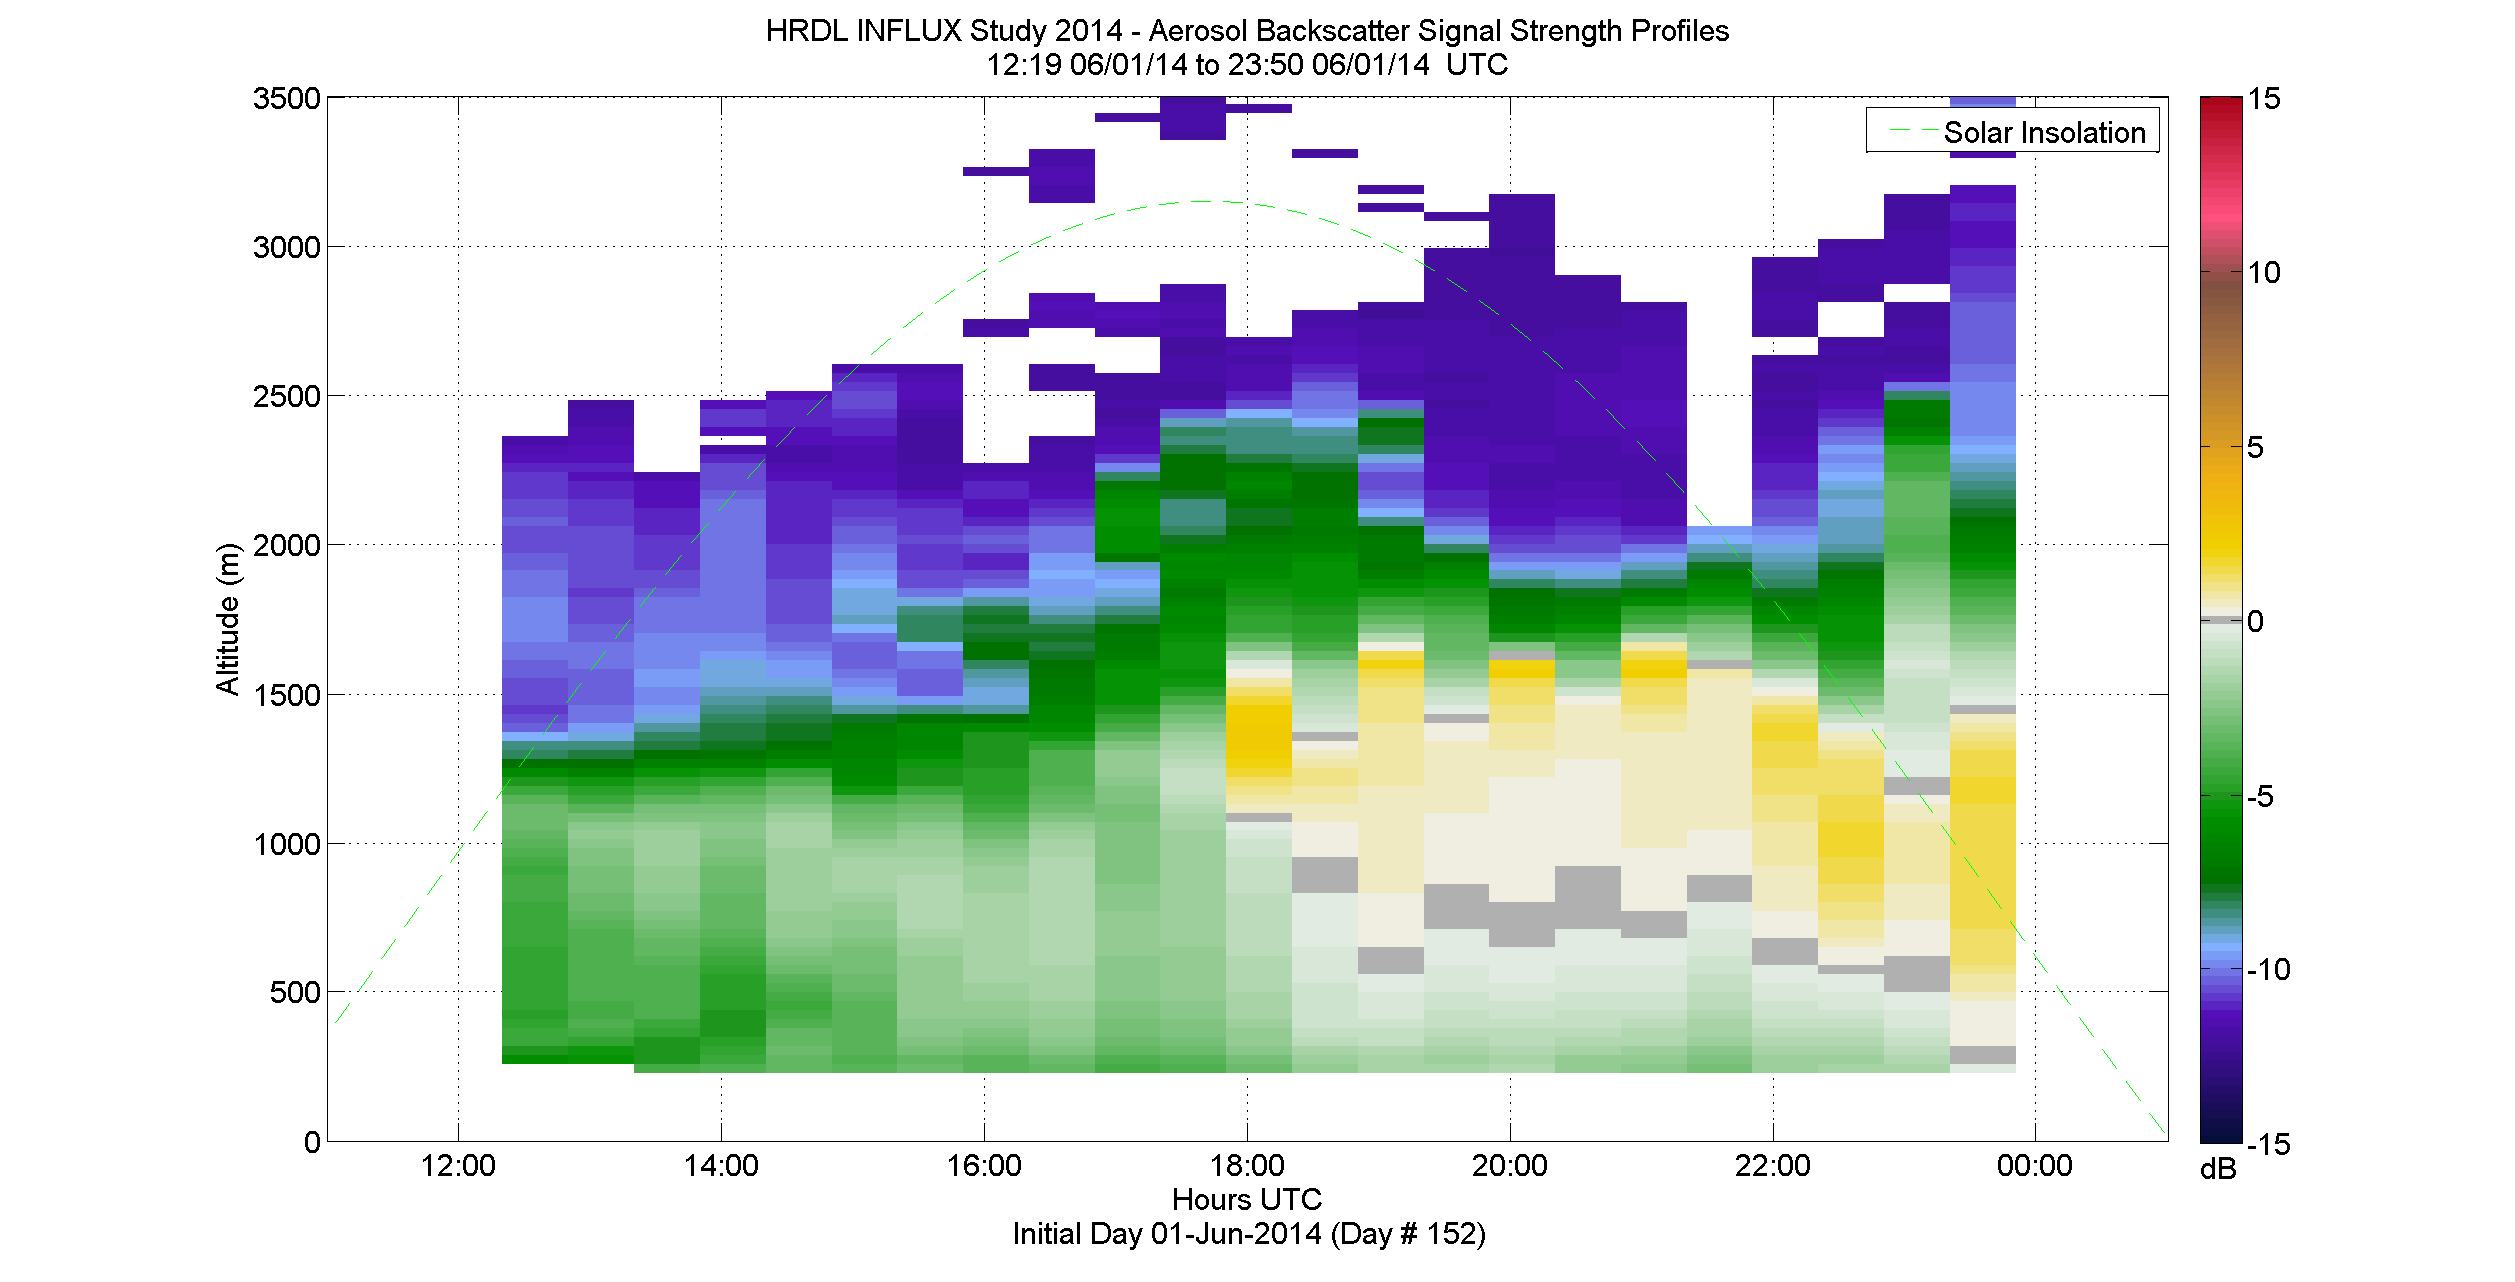 HRDL aerosol backscatter signal strength profile - June 1 pm